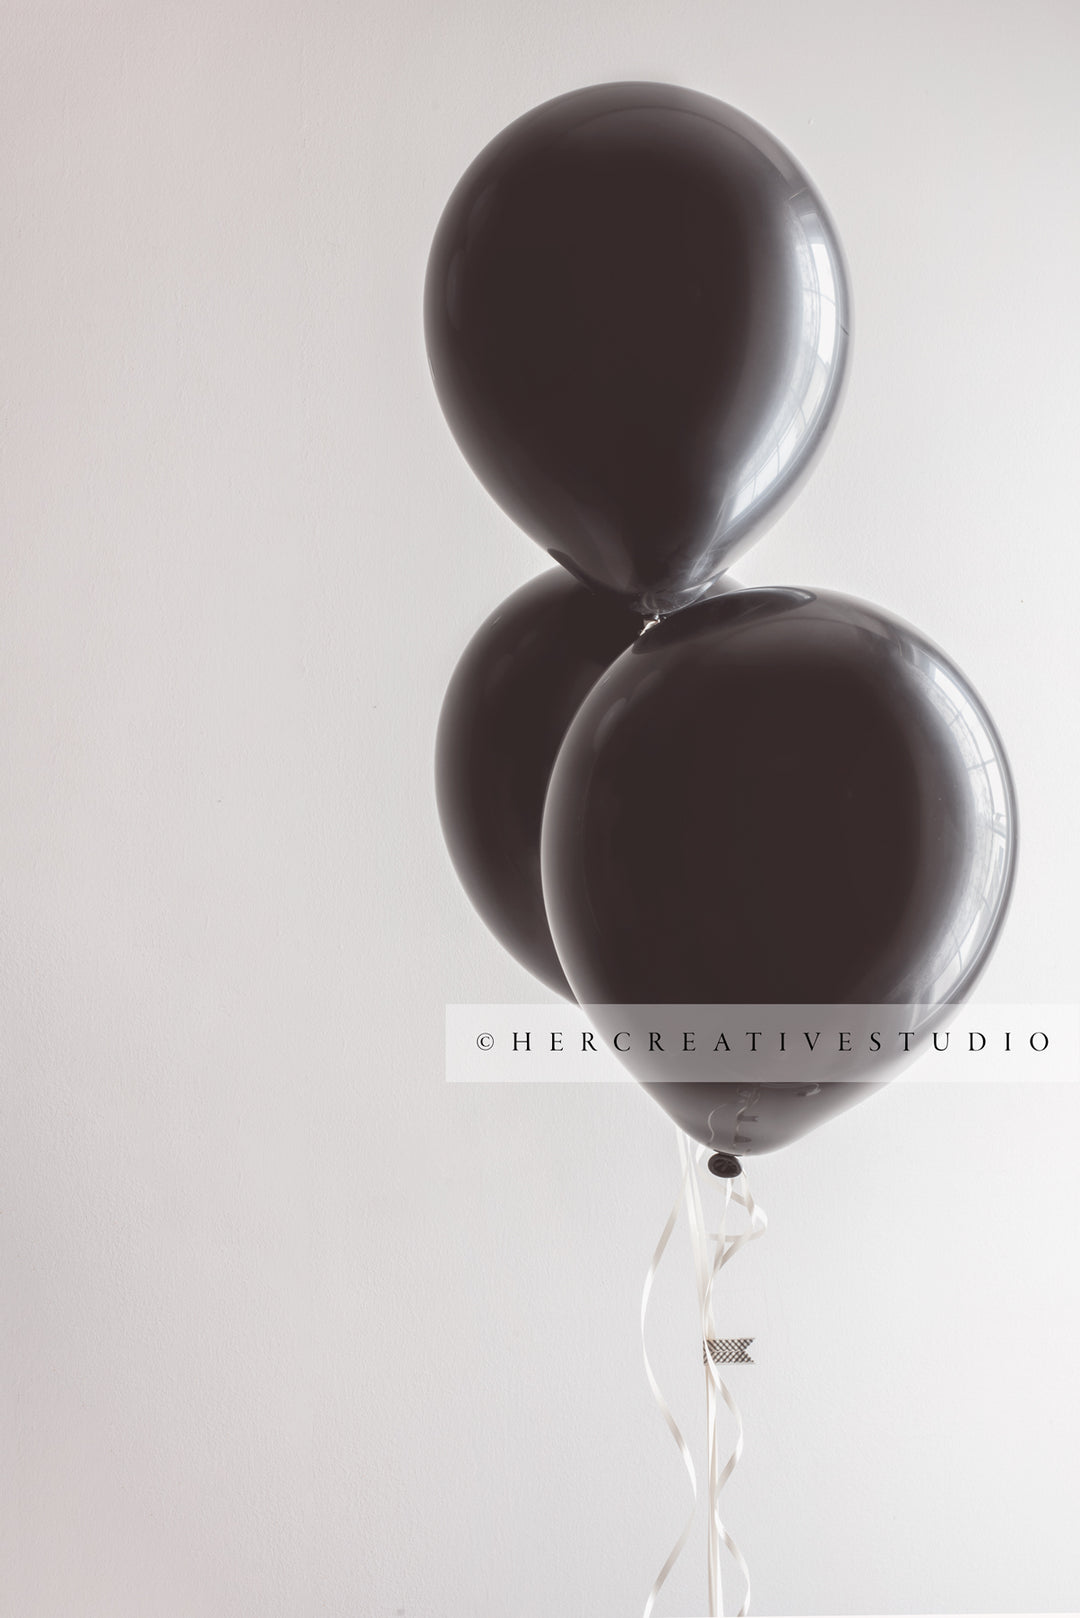 Three Black Balloons, Styled Stock Image